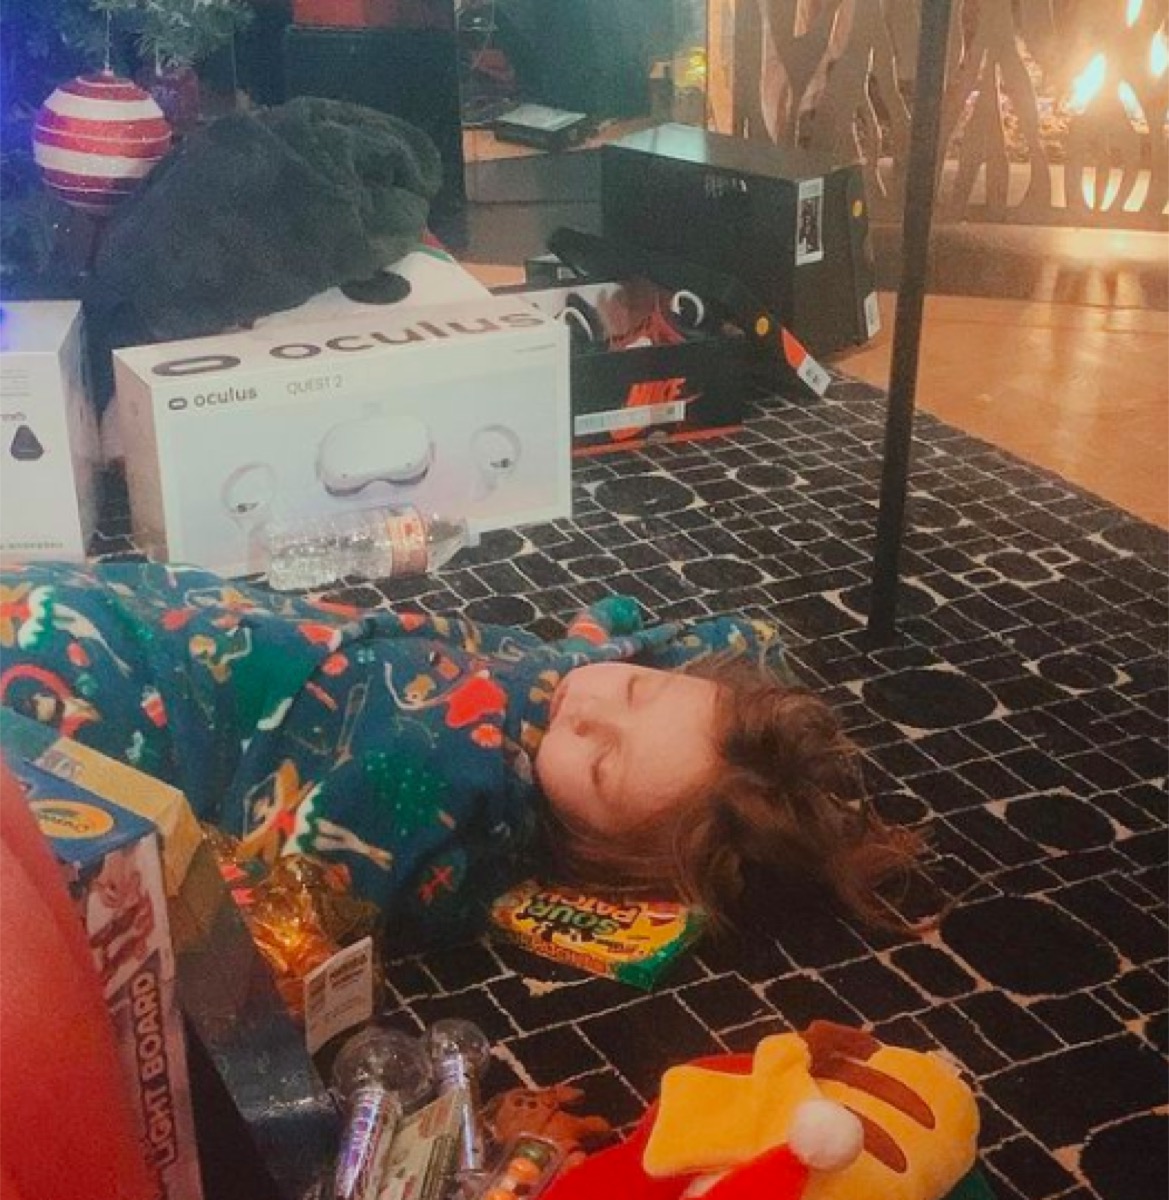 Christina Aguilera's daughter napping